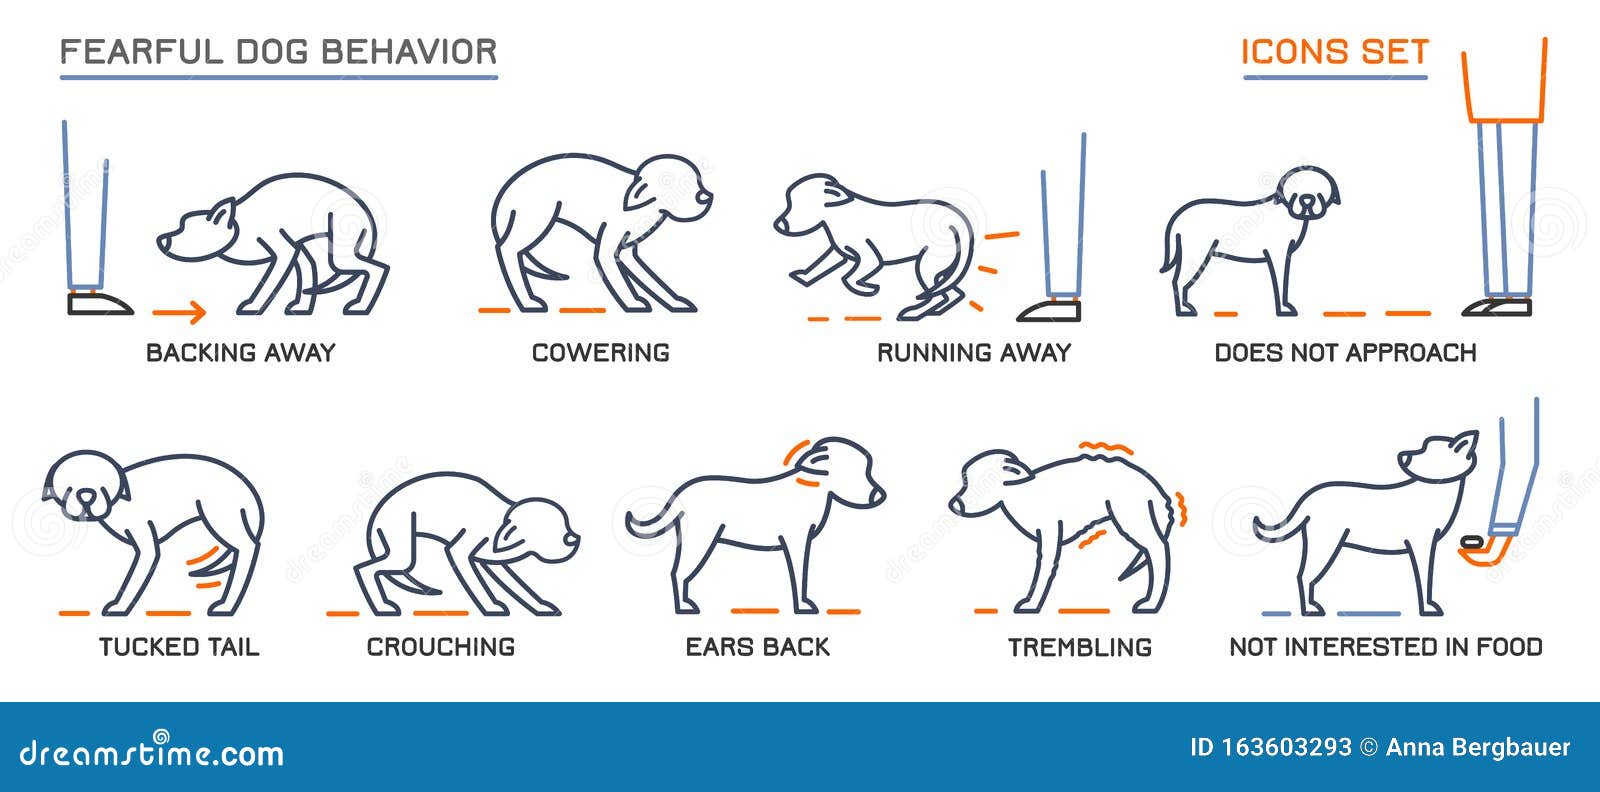 dog behavior icons set